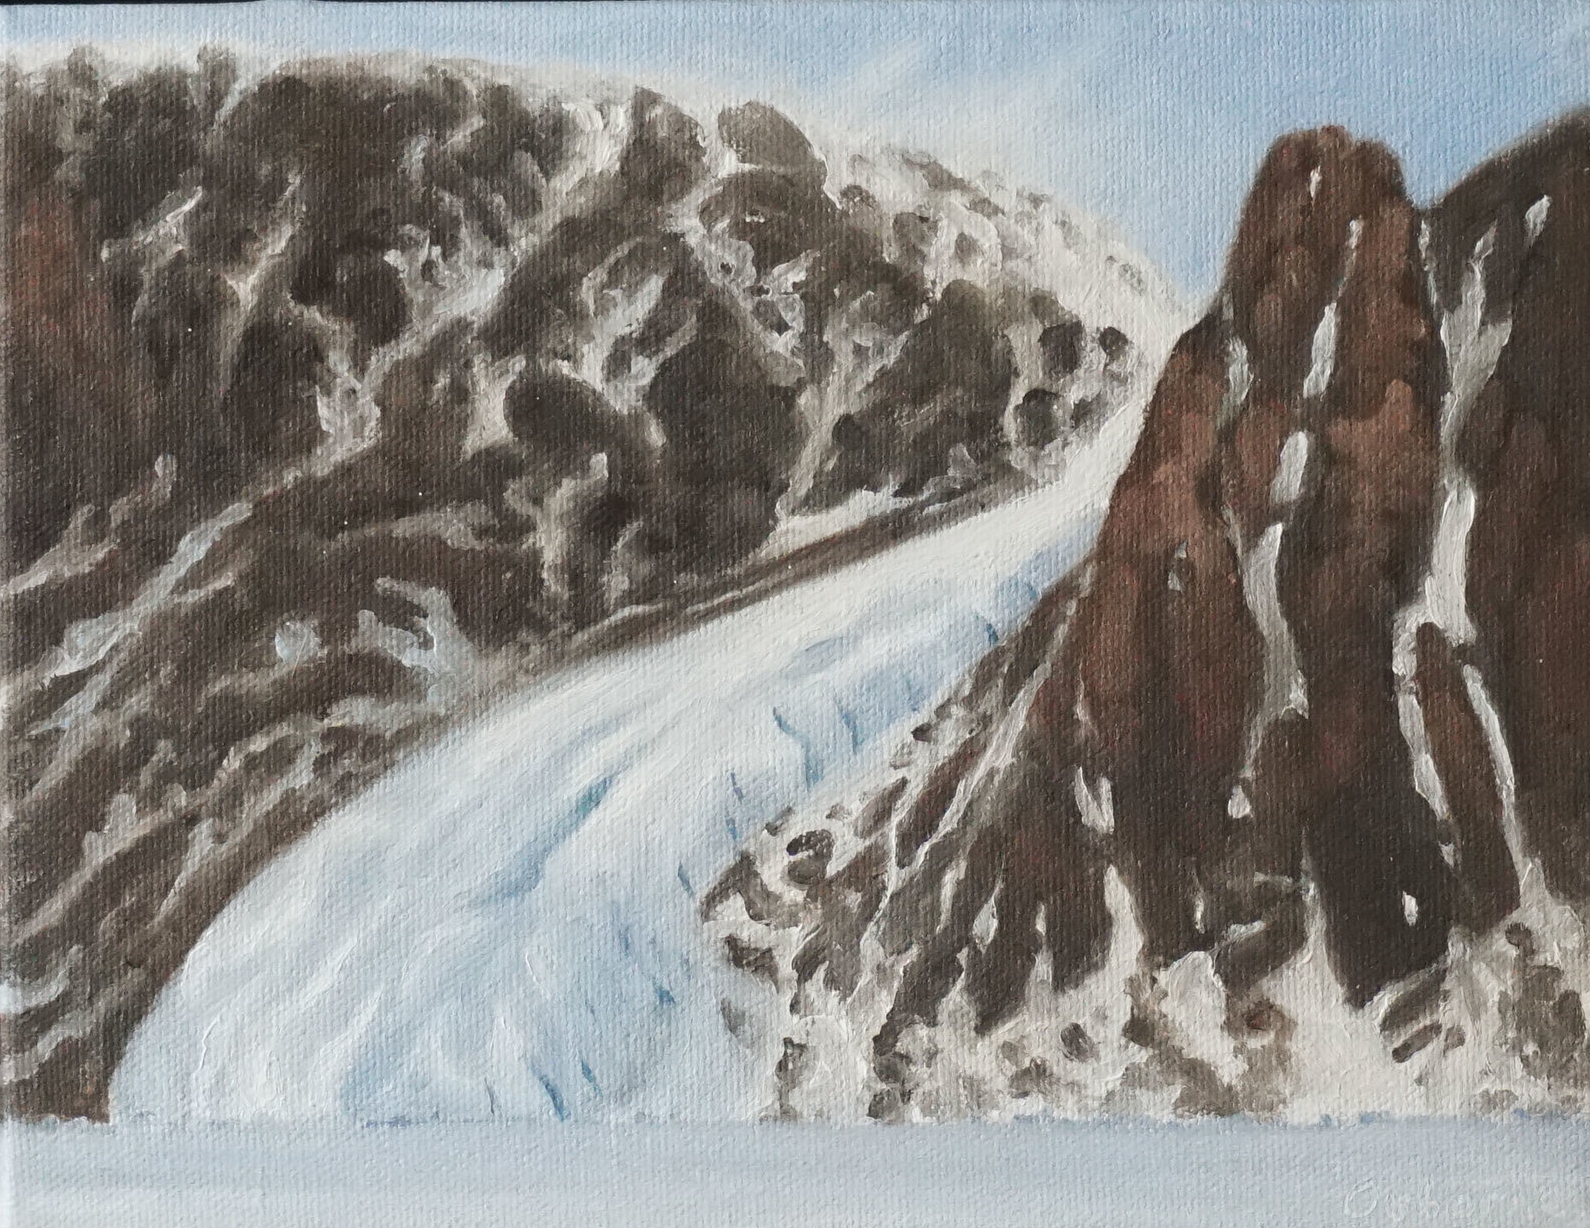    Glacier Camp , 15cm x 25cm, oil on canvas, 2005.  